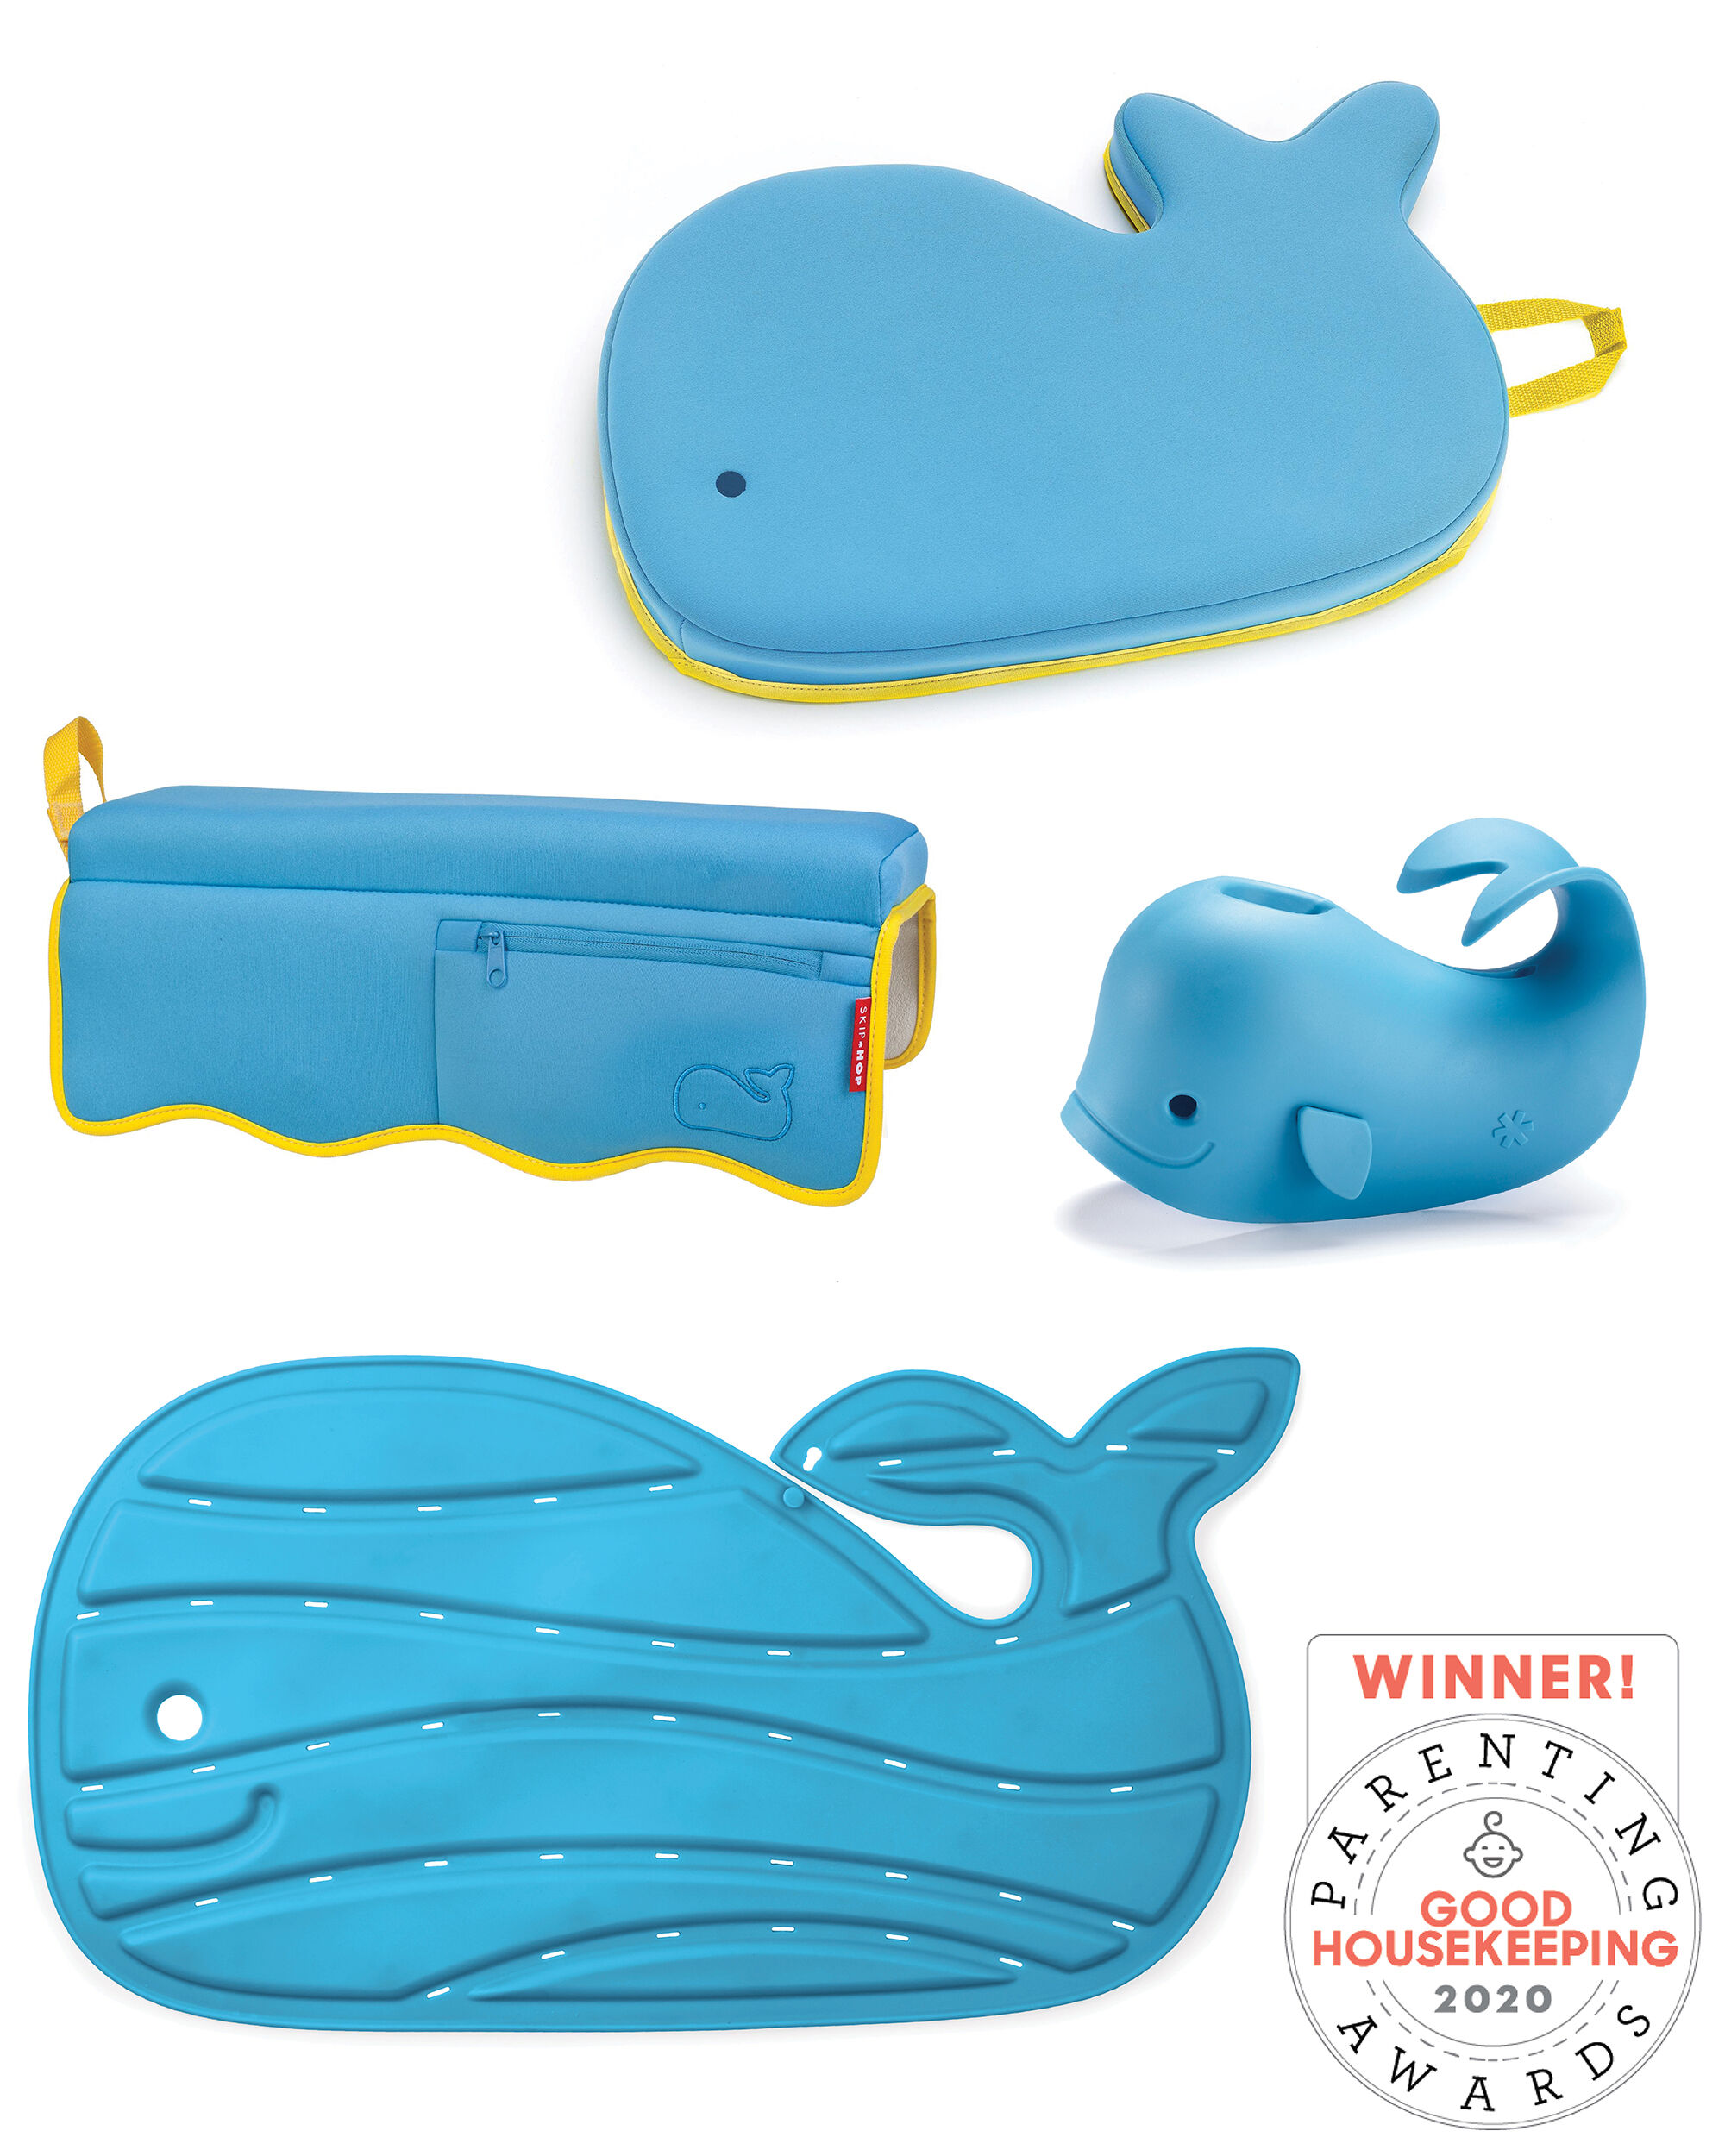 Baby Blue Moby Bathtime Essentials Kit – Blue | skiphop.com